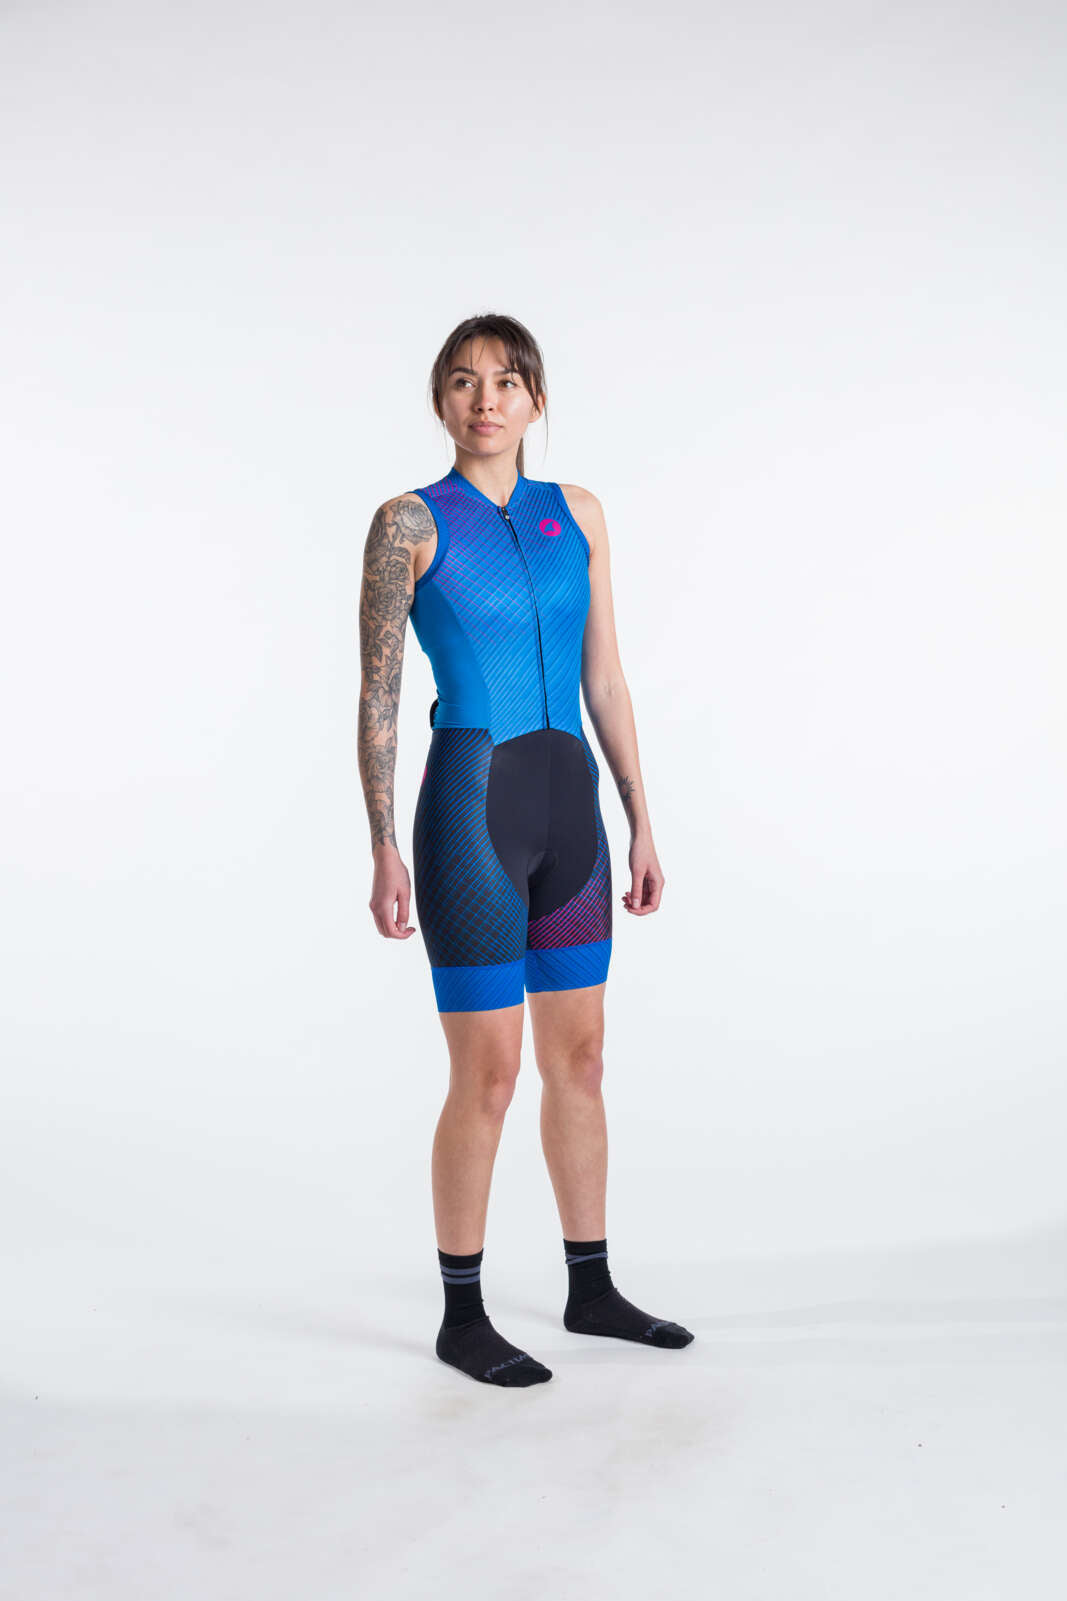 Women's Sleeveless Triathlon Suit - Front View